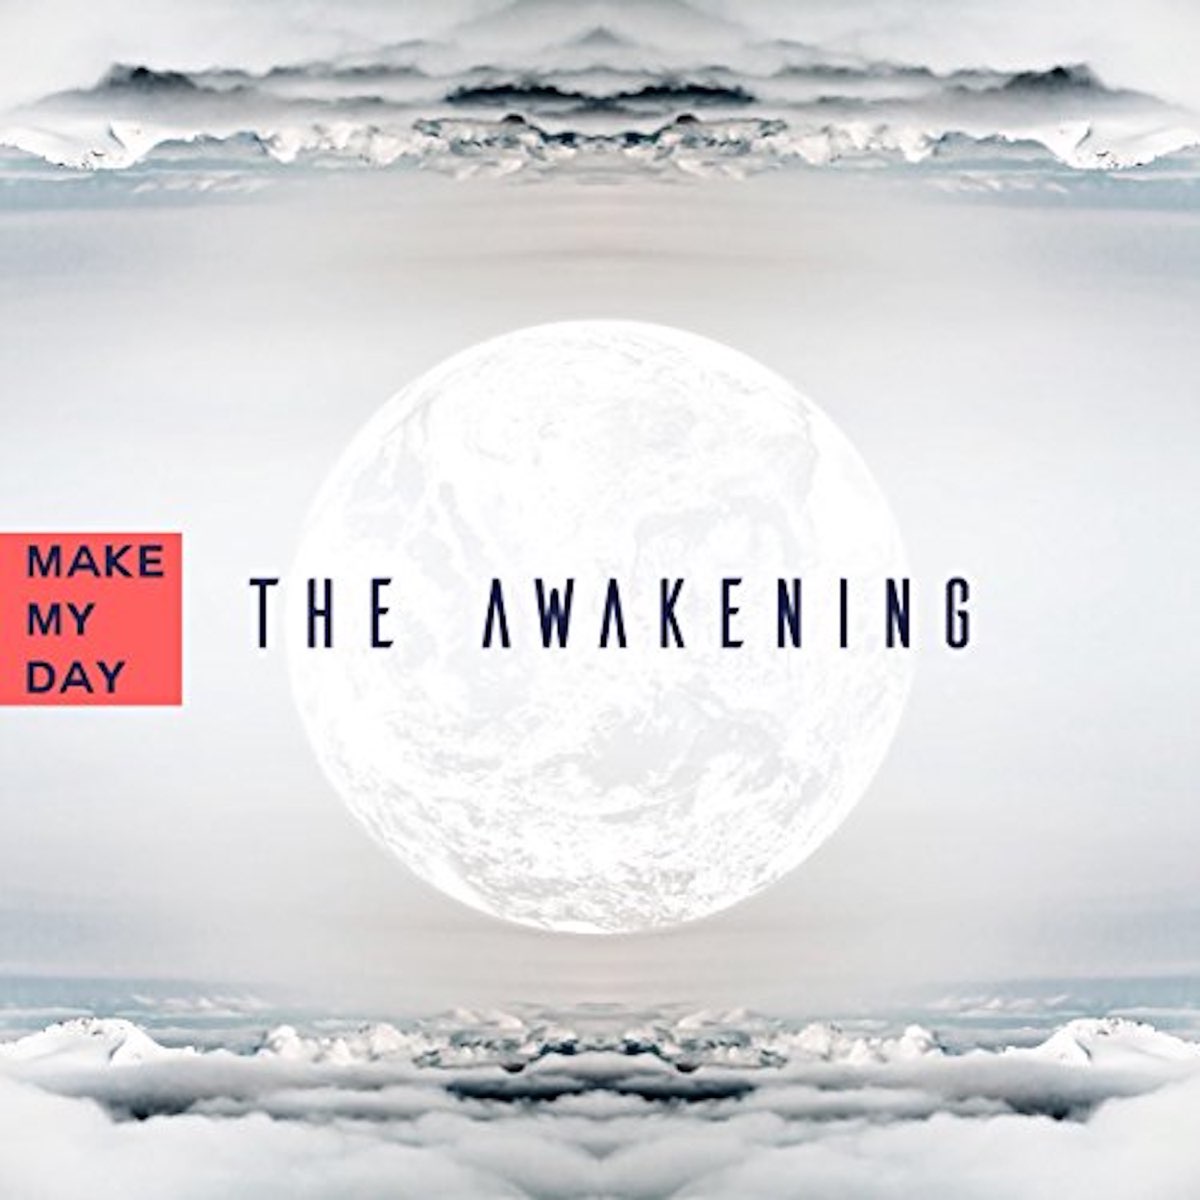 Make my day. The Awakening обложка. Альбомы before the Day Awakes. Make my Day песня. Creo Awaken обложка.